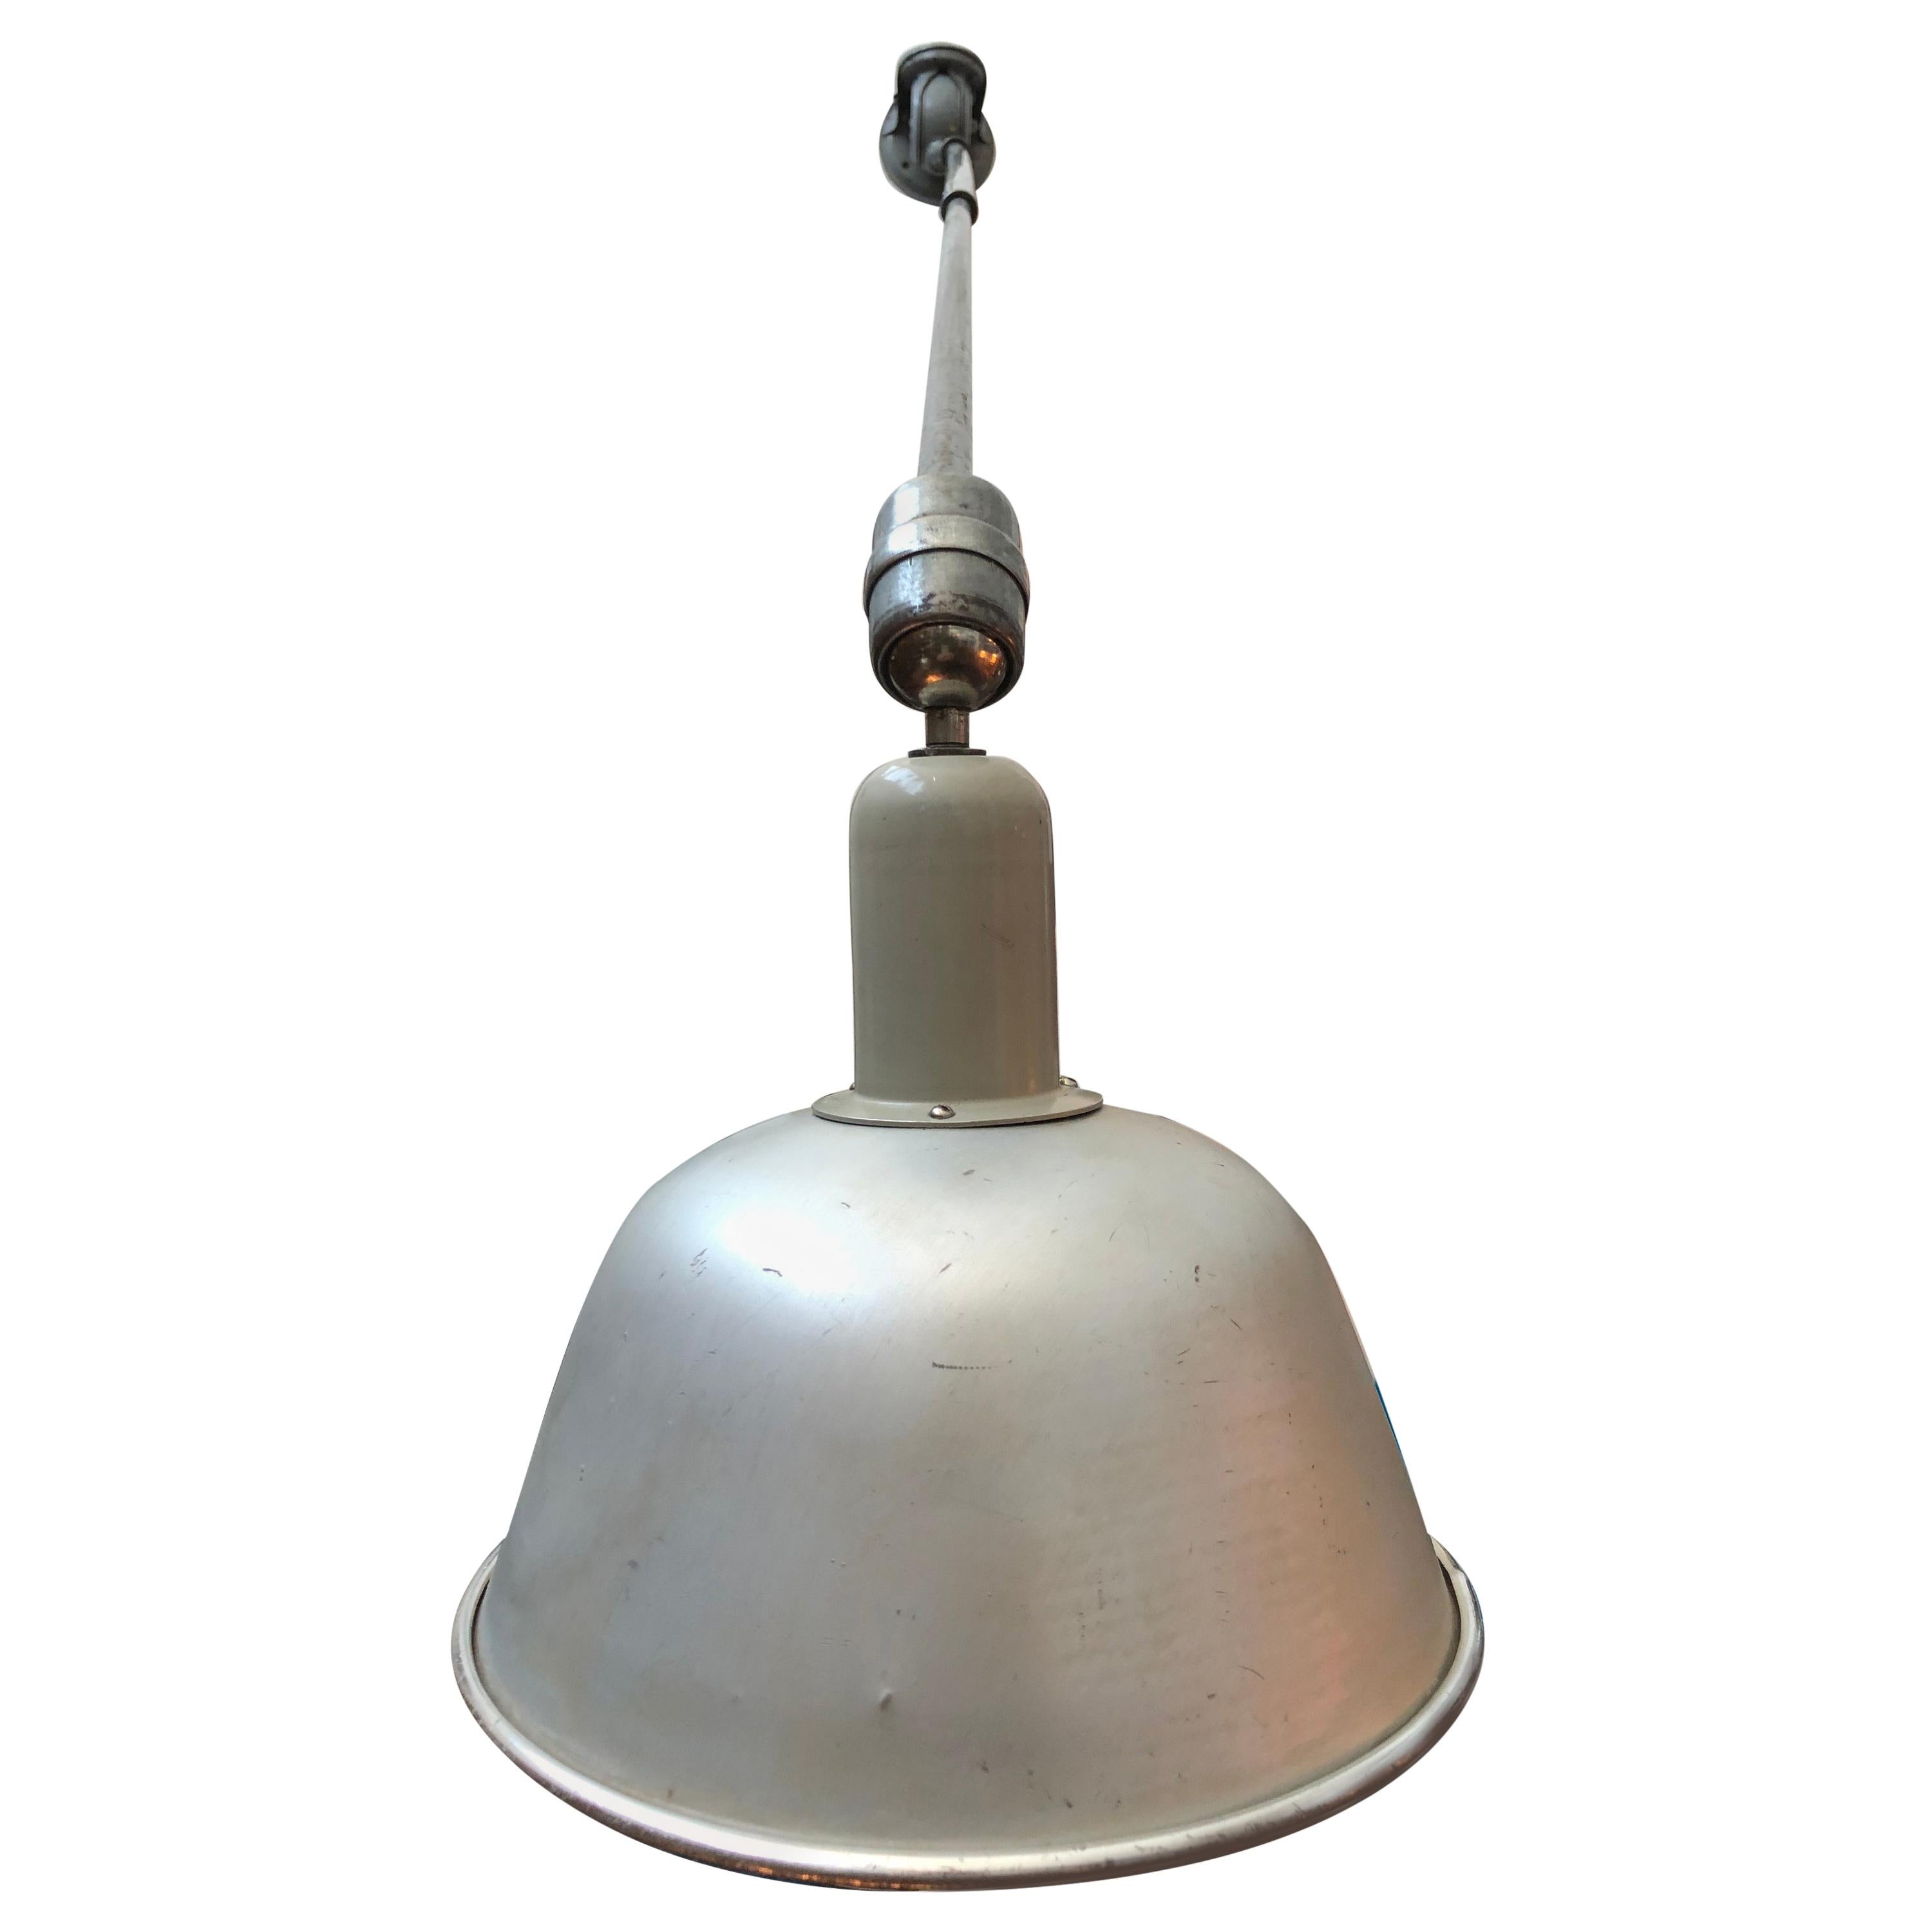 Classic Vintage Triplex Work Lamp by Johan Petter Johansson for ASEA of Sweden